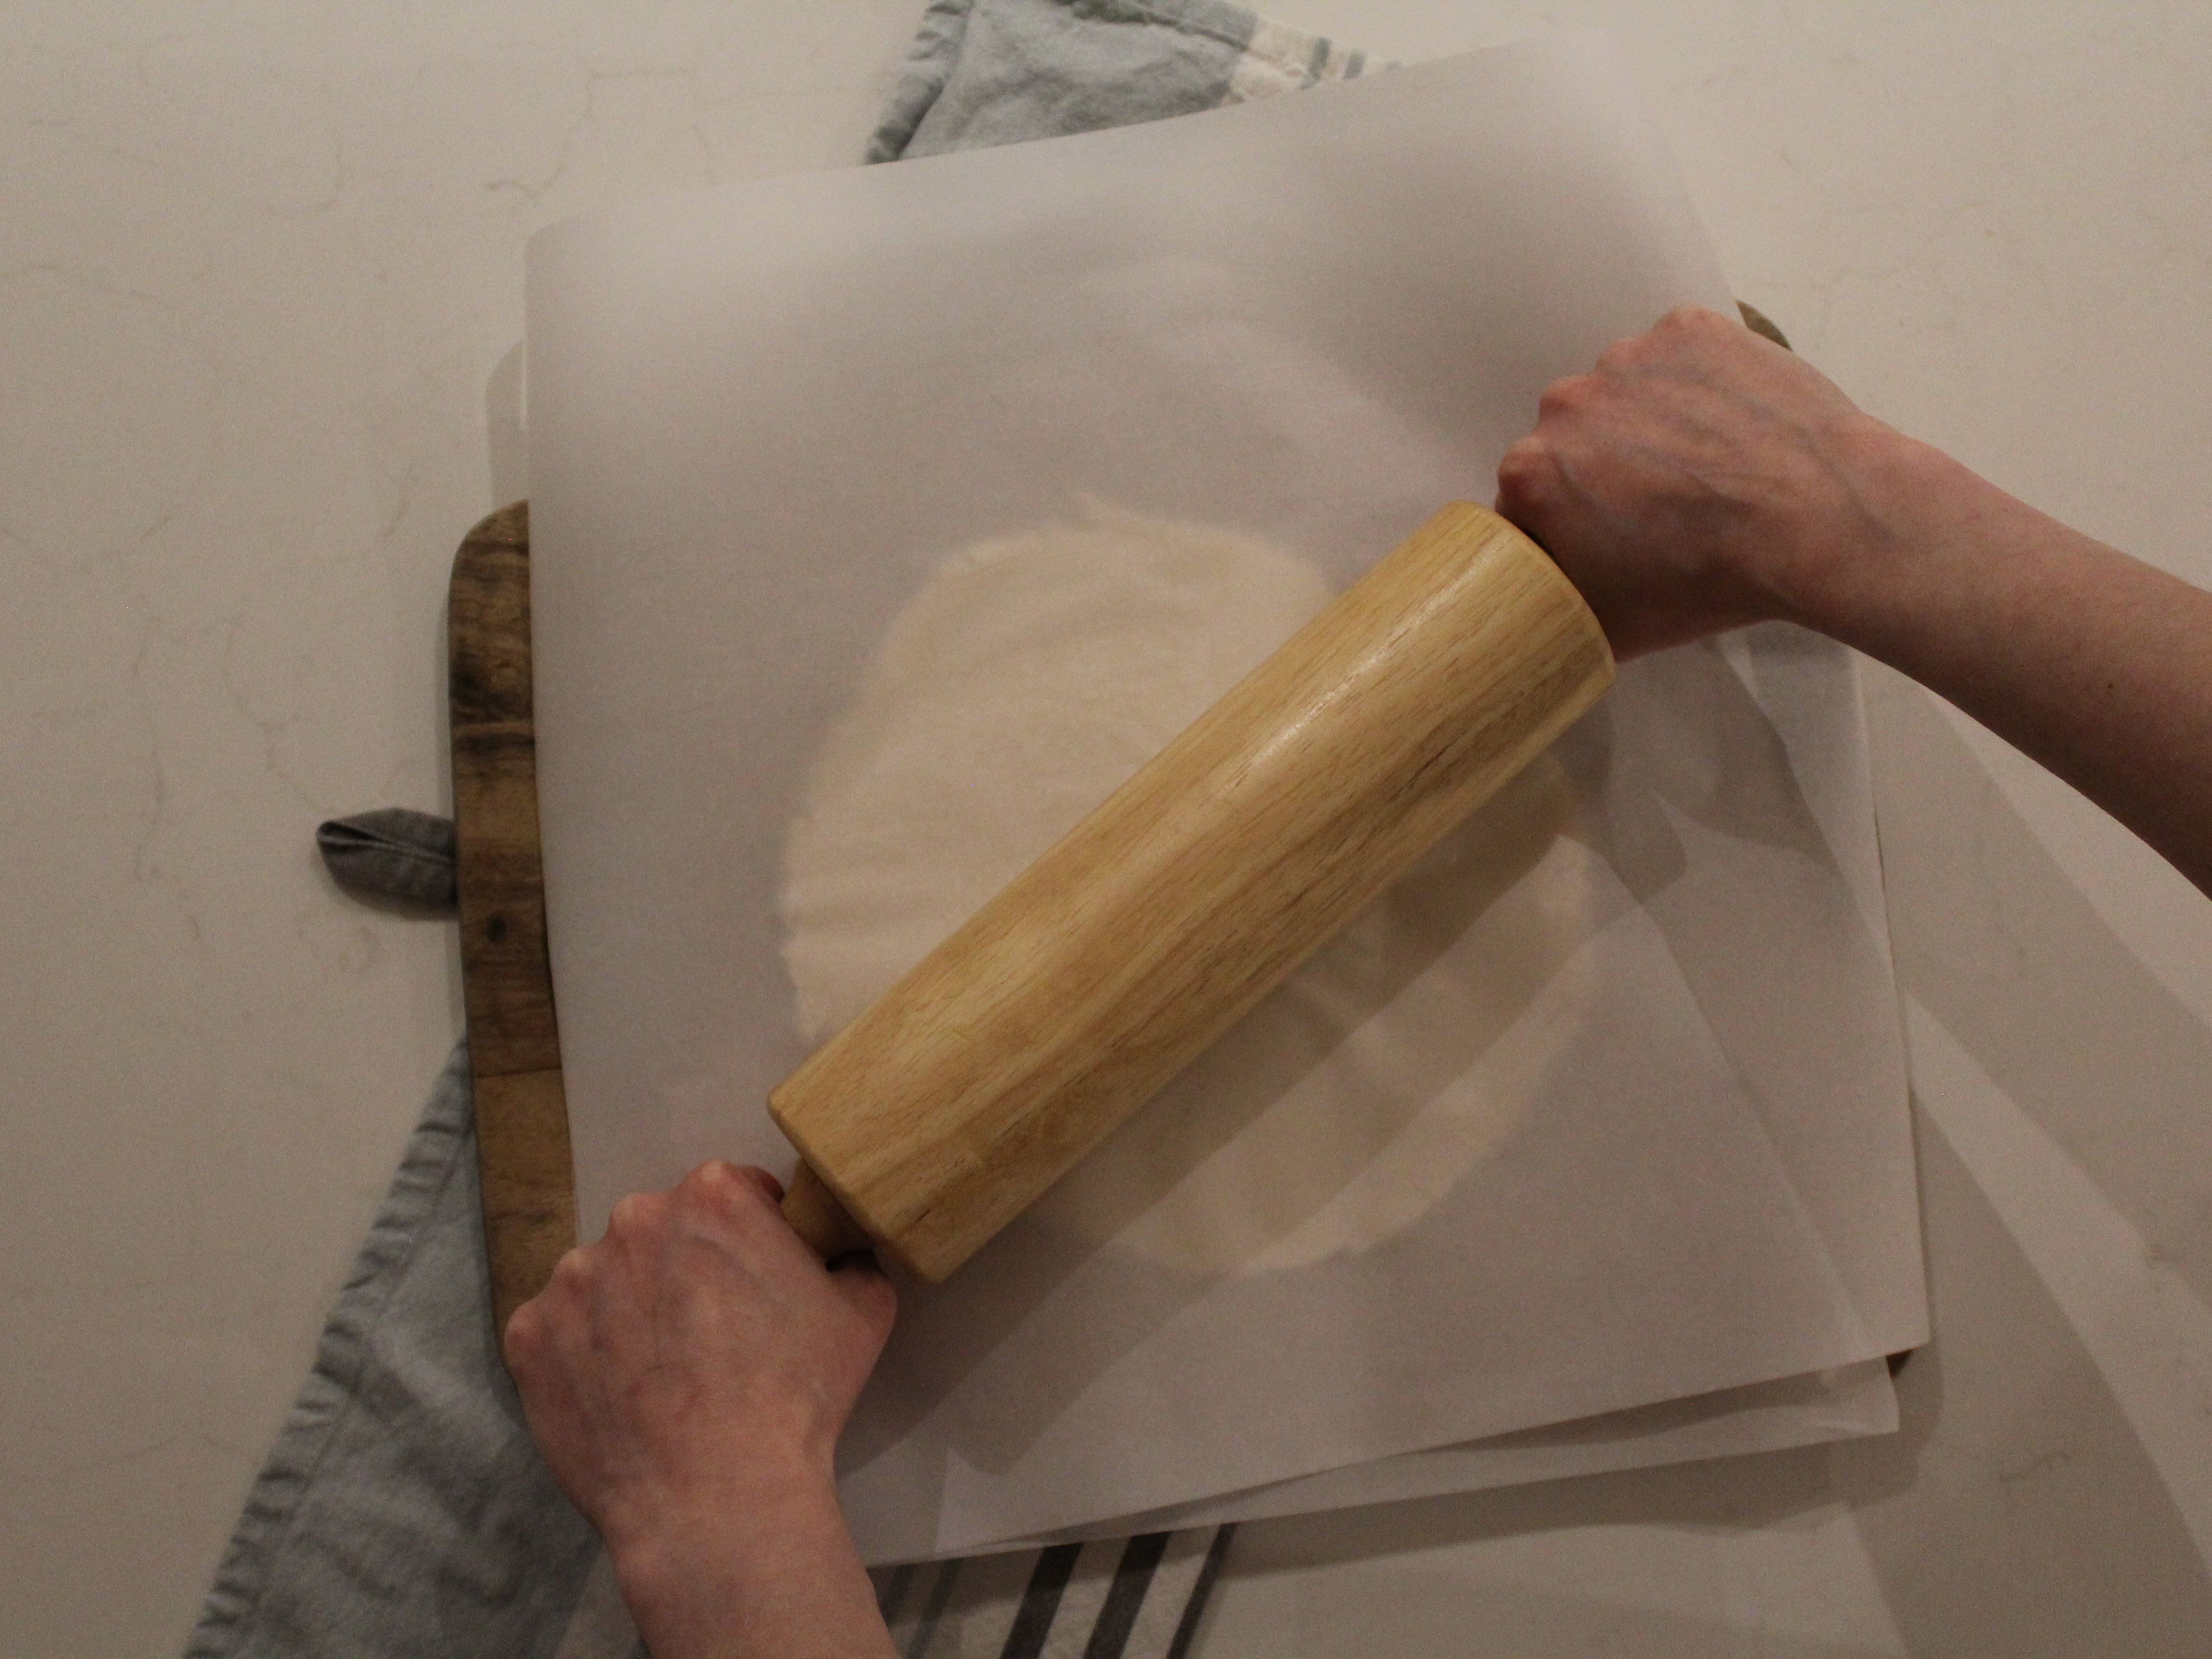 Rolling dough to make a paw print